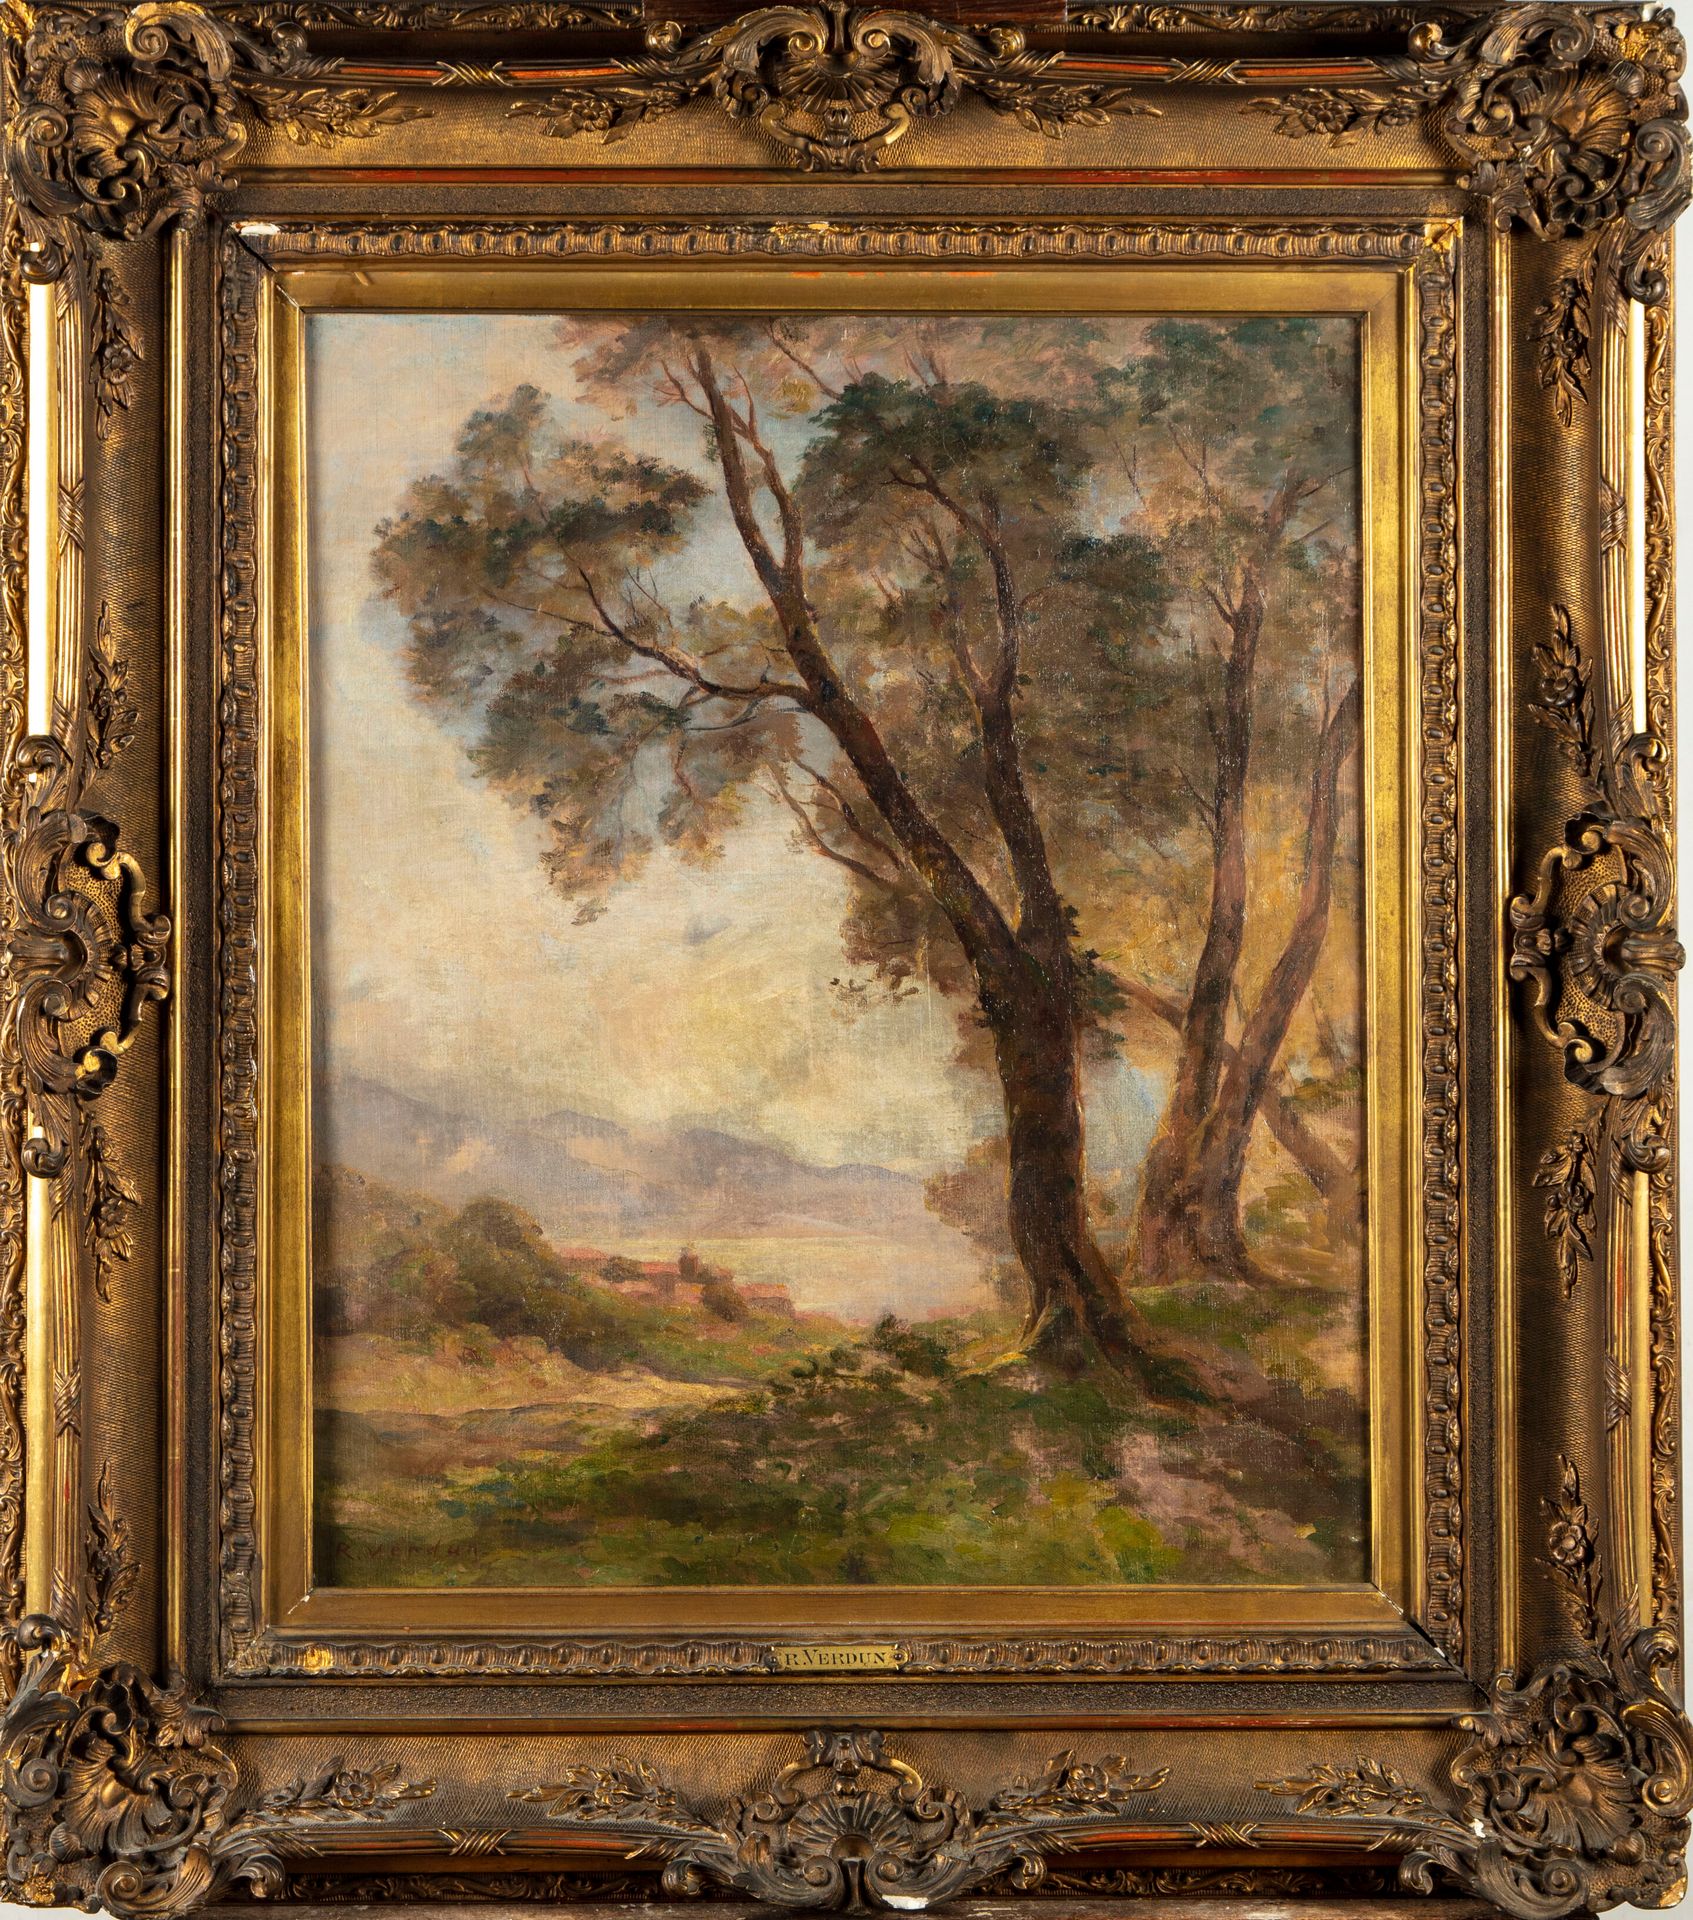 Null Raymond VERDUN (1873-1954)

矮树丛

布面油画，左下角有签名

56 x 46,5 cm

框架的小事故